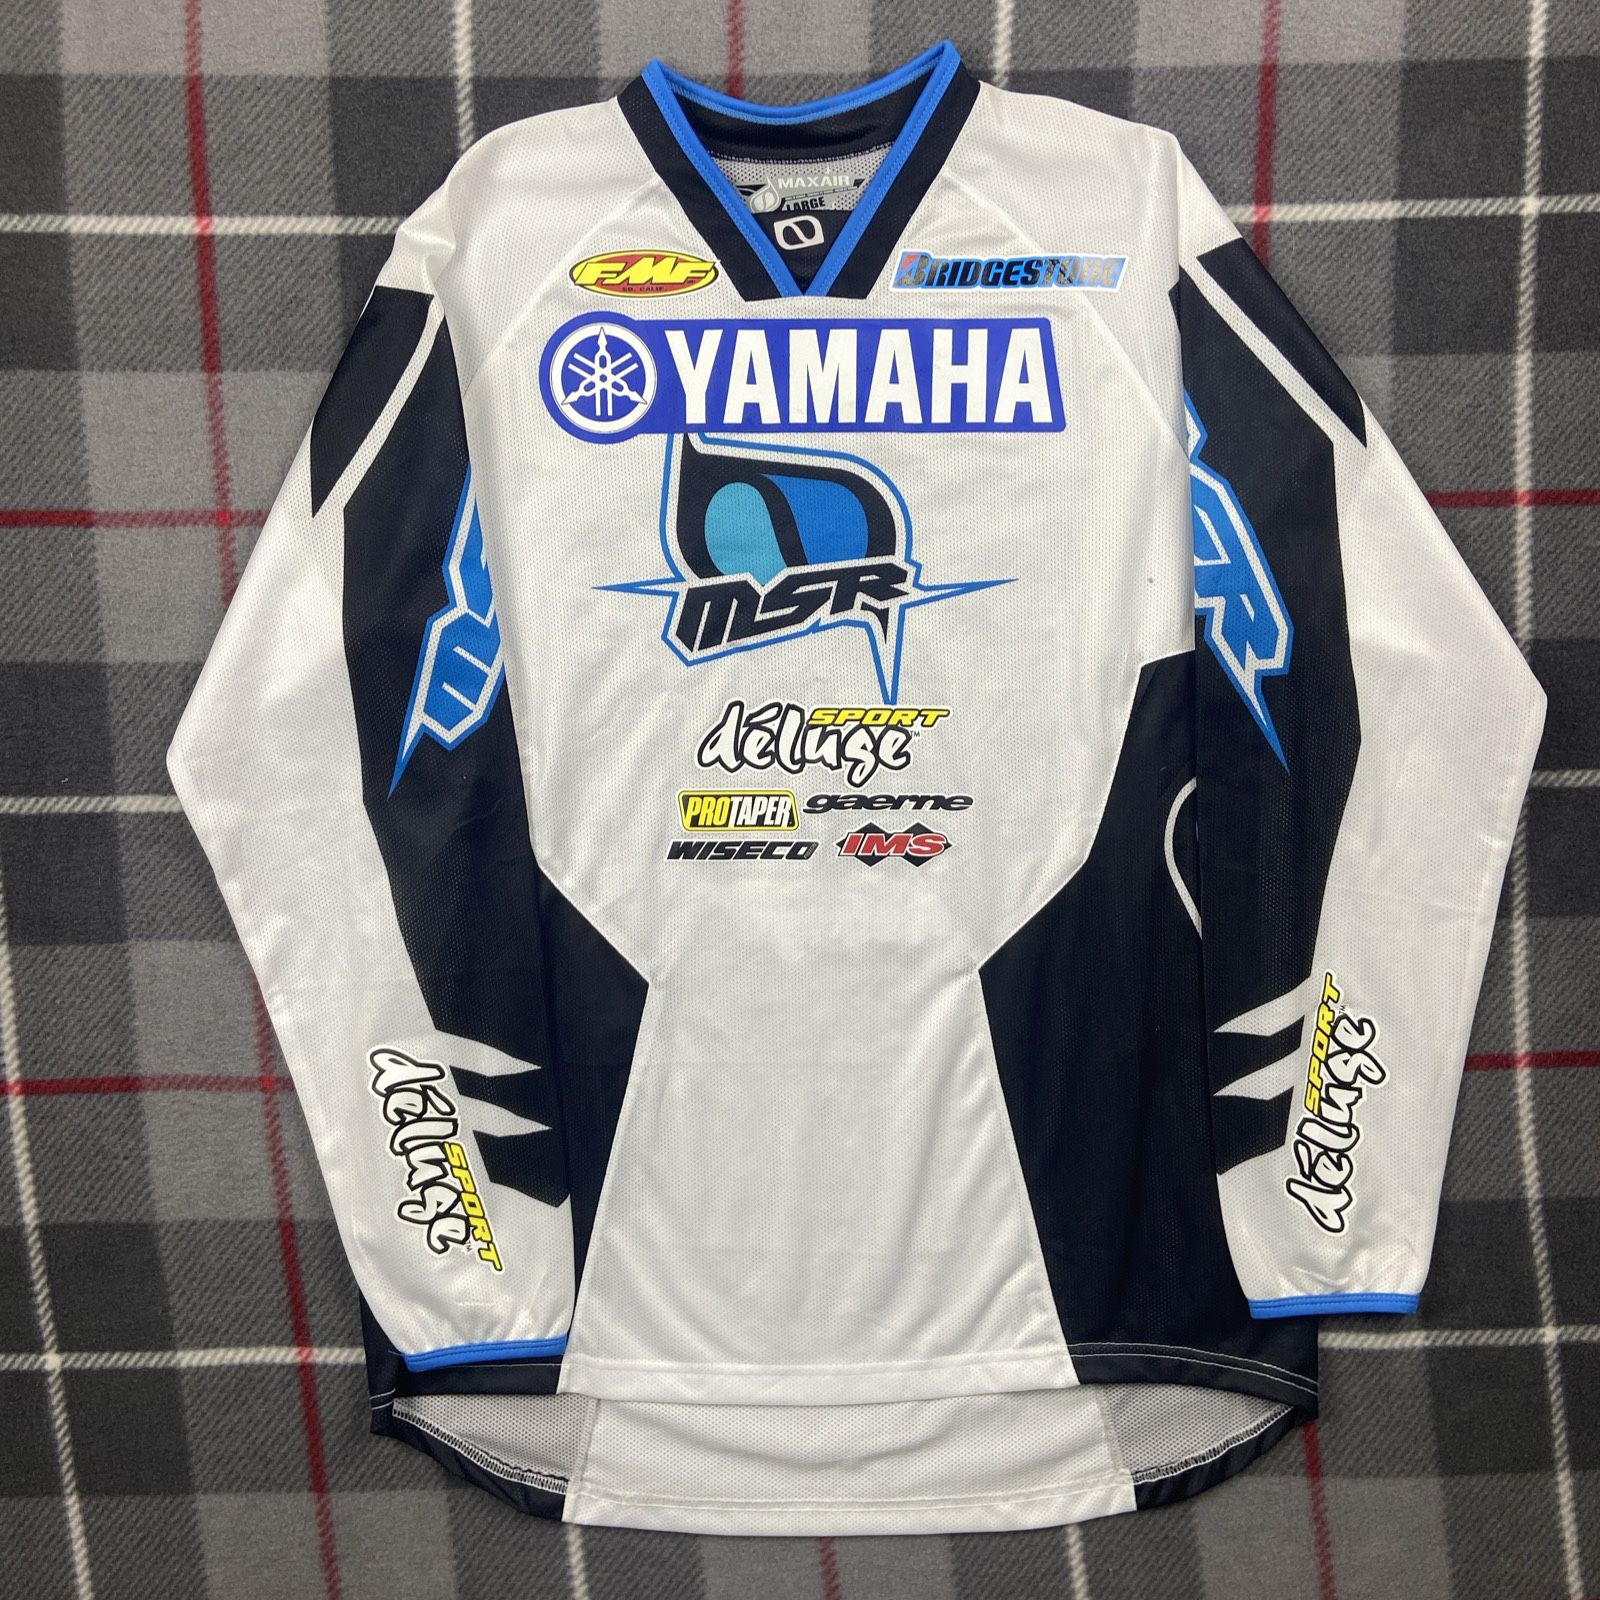 Jason Raines Jersey Motocross Men’s Large Yamaha